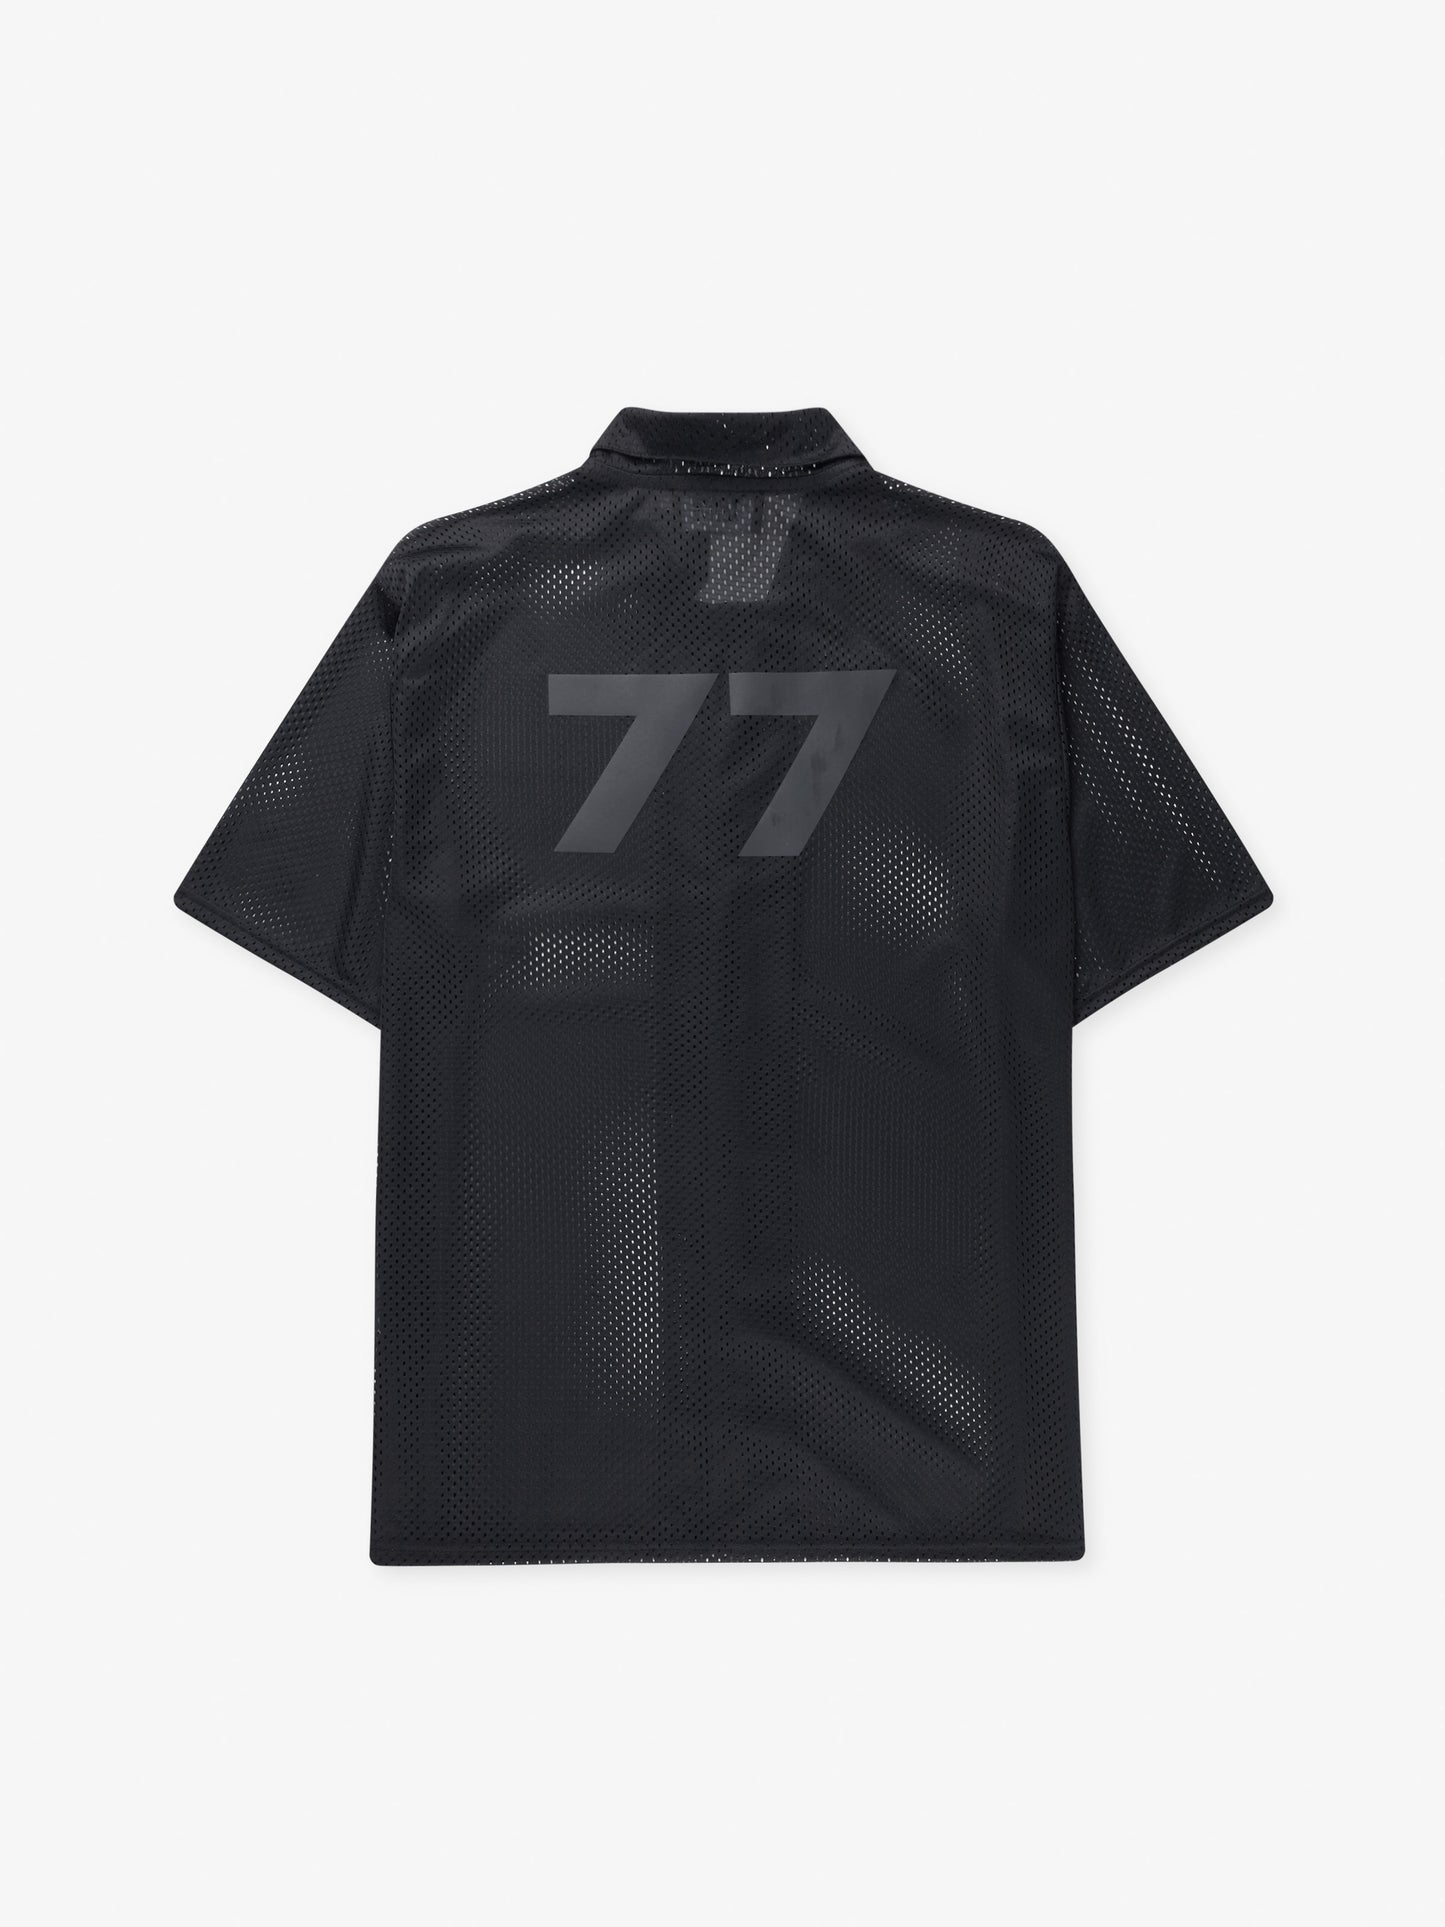 7 DAYS Mesh Shirt Shirts 001 Black